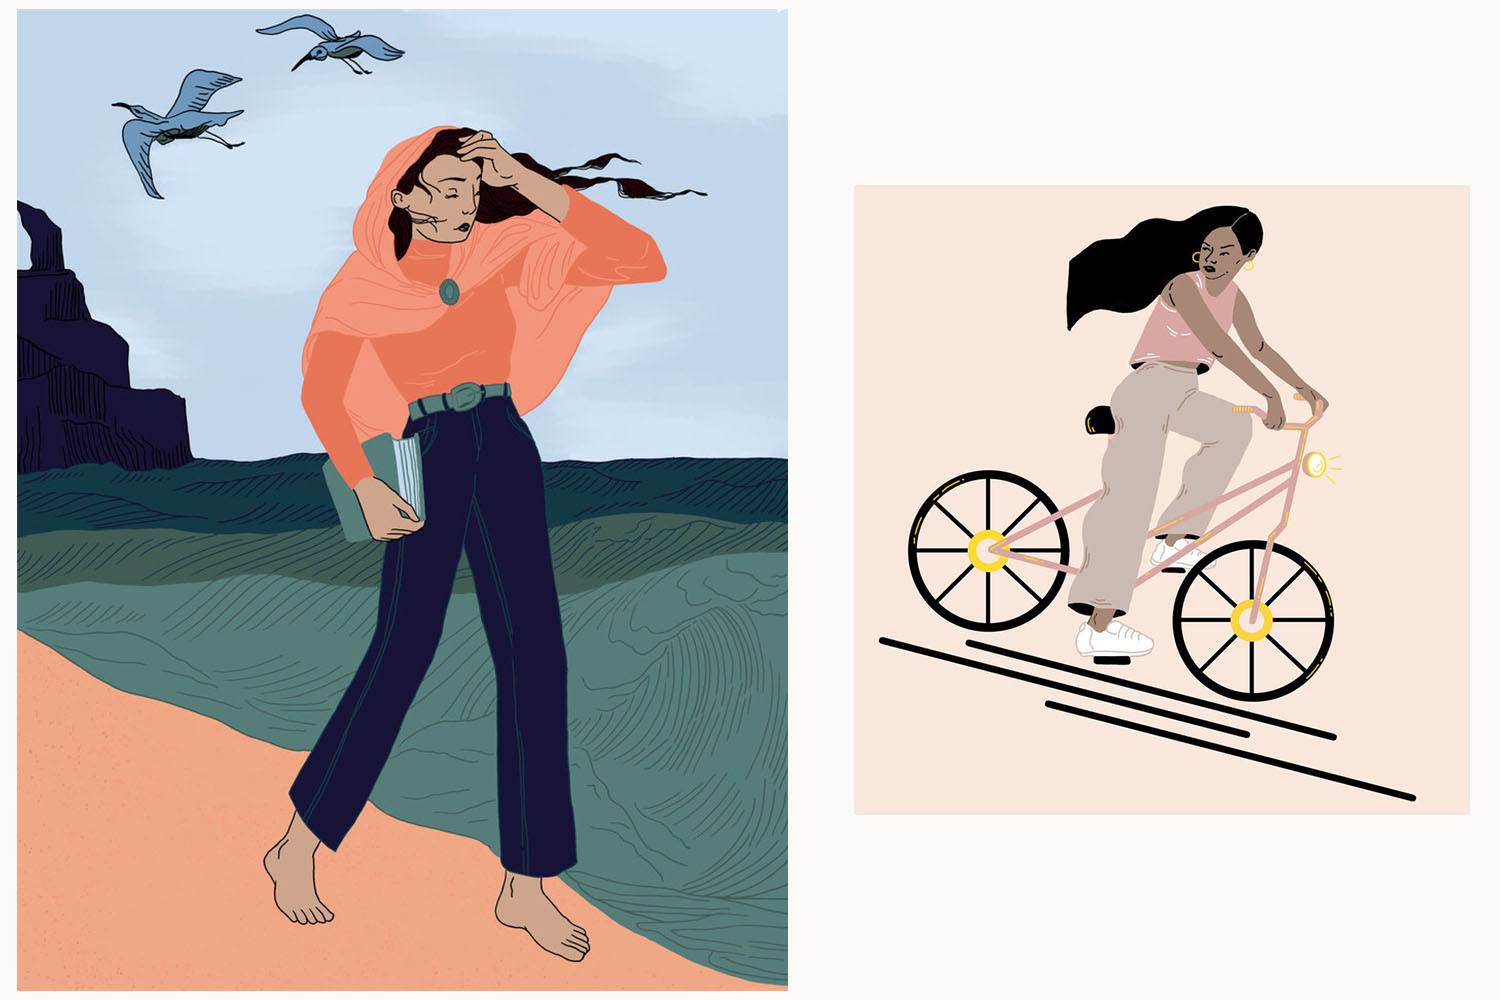 Nancy's Artwork. Women a the beach. On the right, women on a bike.